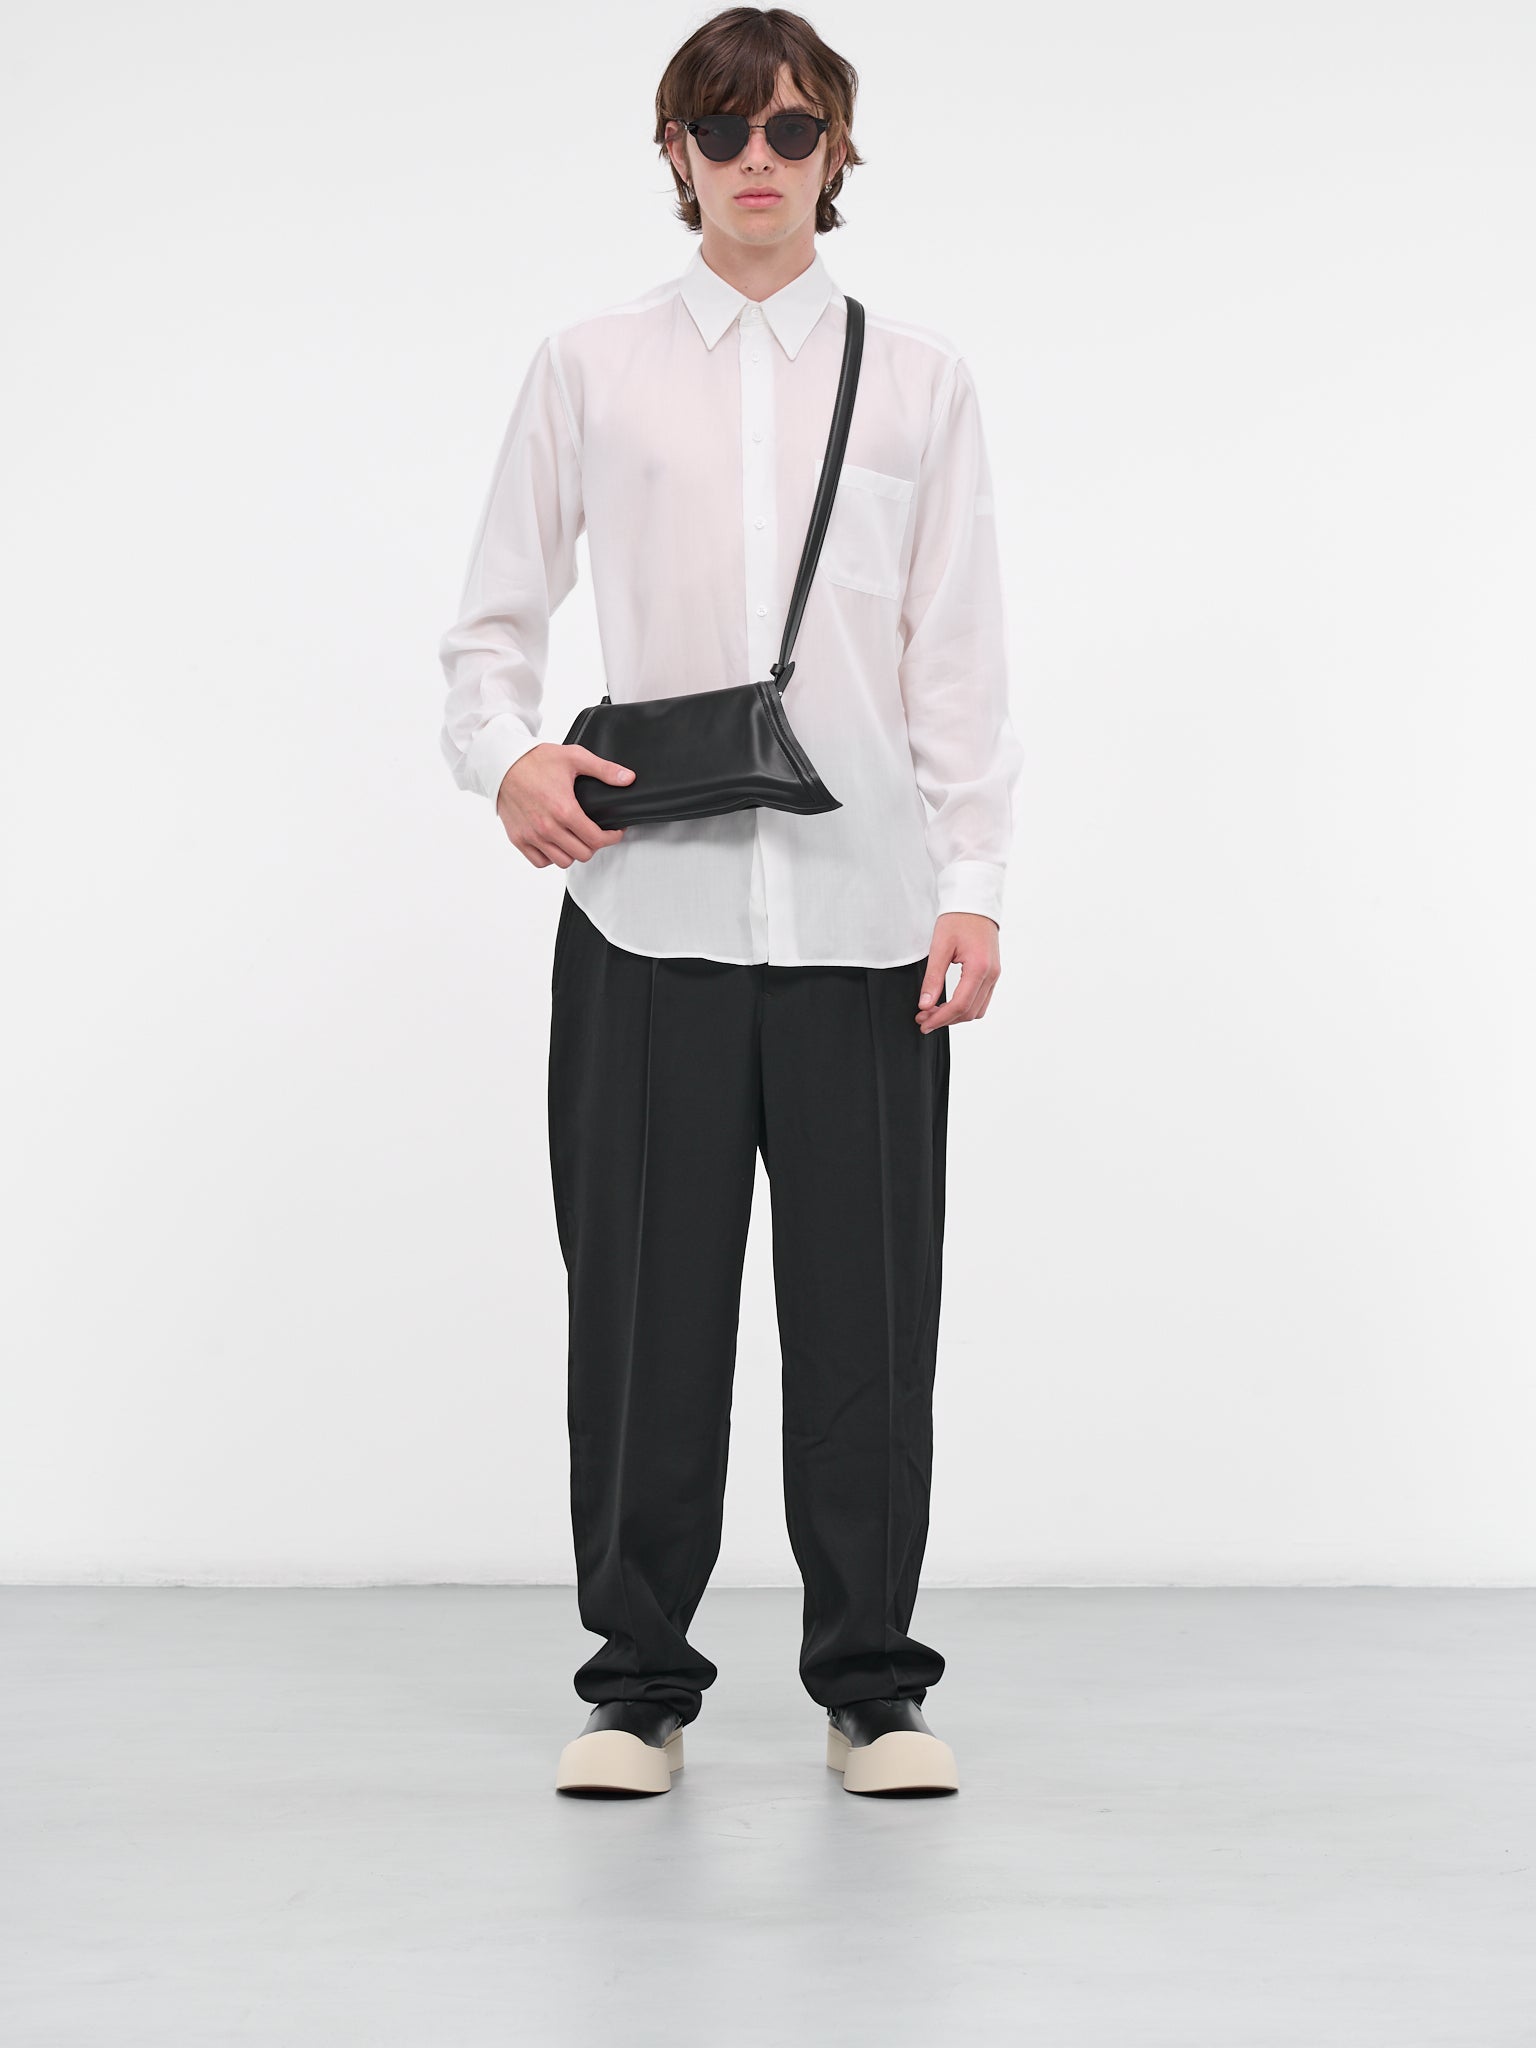 Sheer Classic Poplin Shirt (HJ-B83-250-2-WHITE)